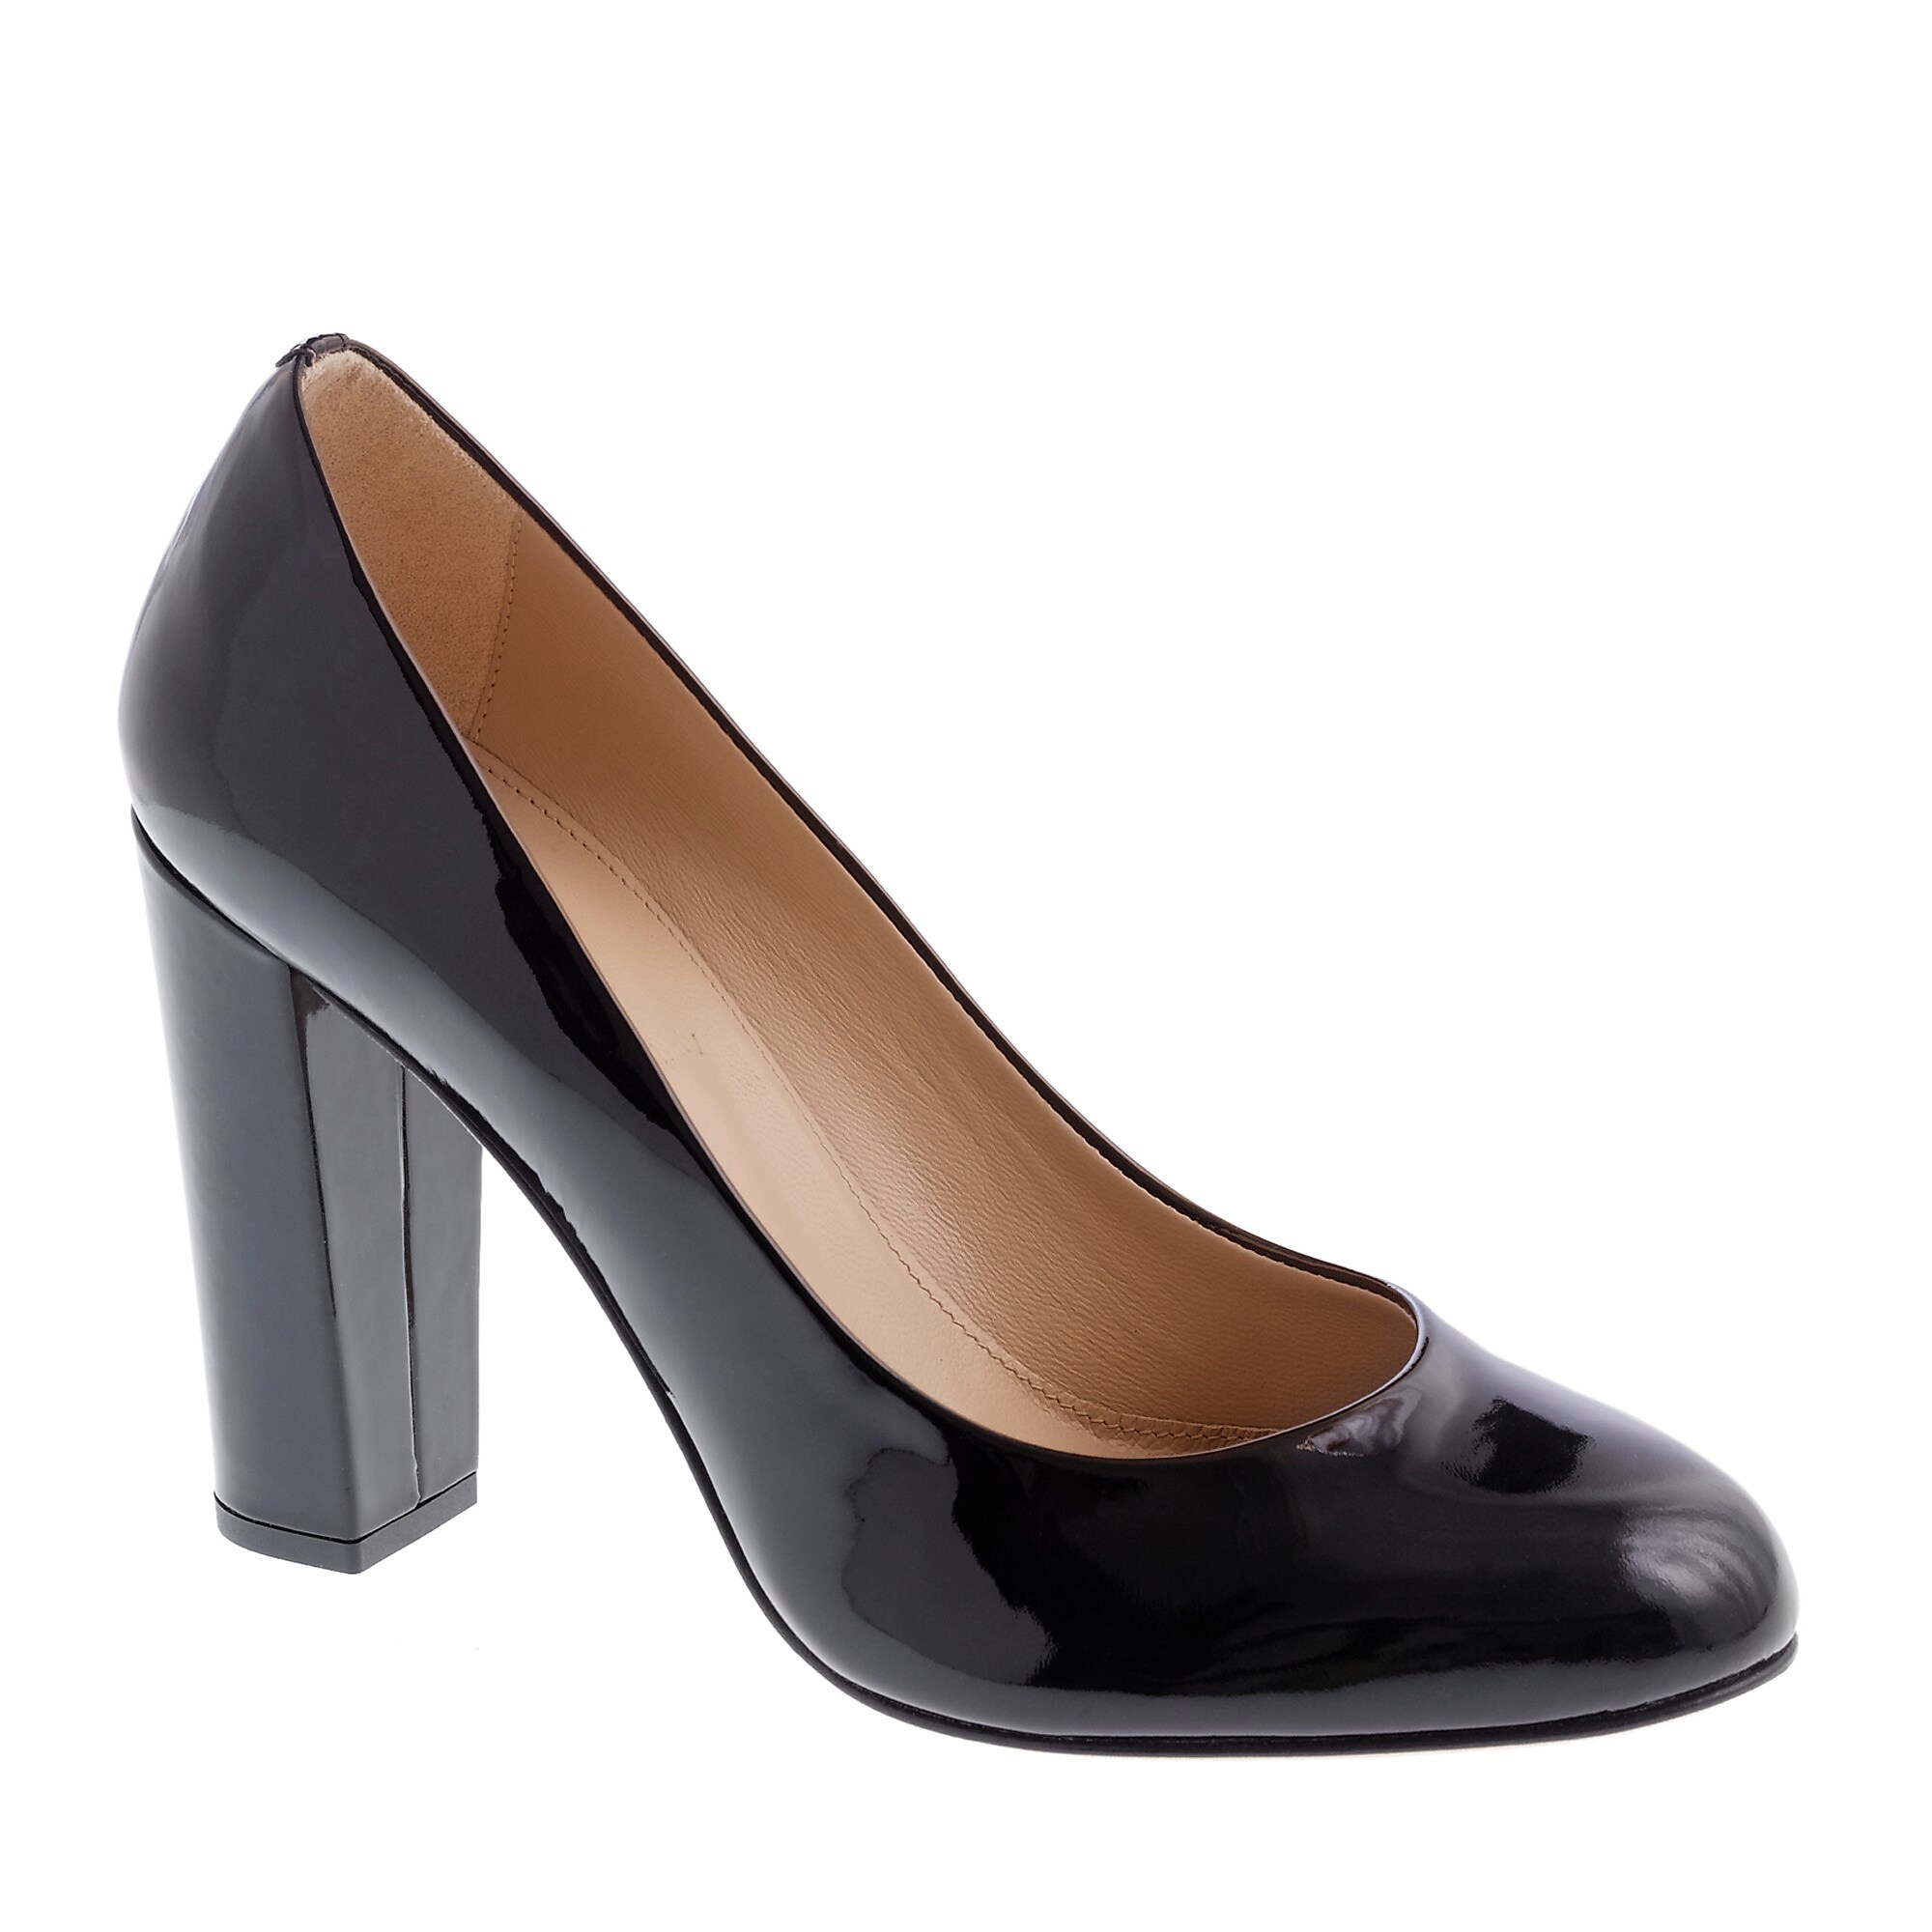 Etta patent pumps : Women Heels | J.Crew